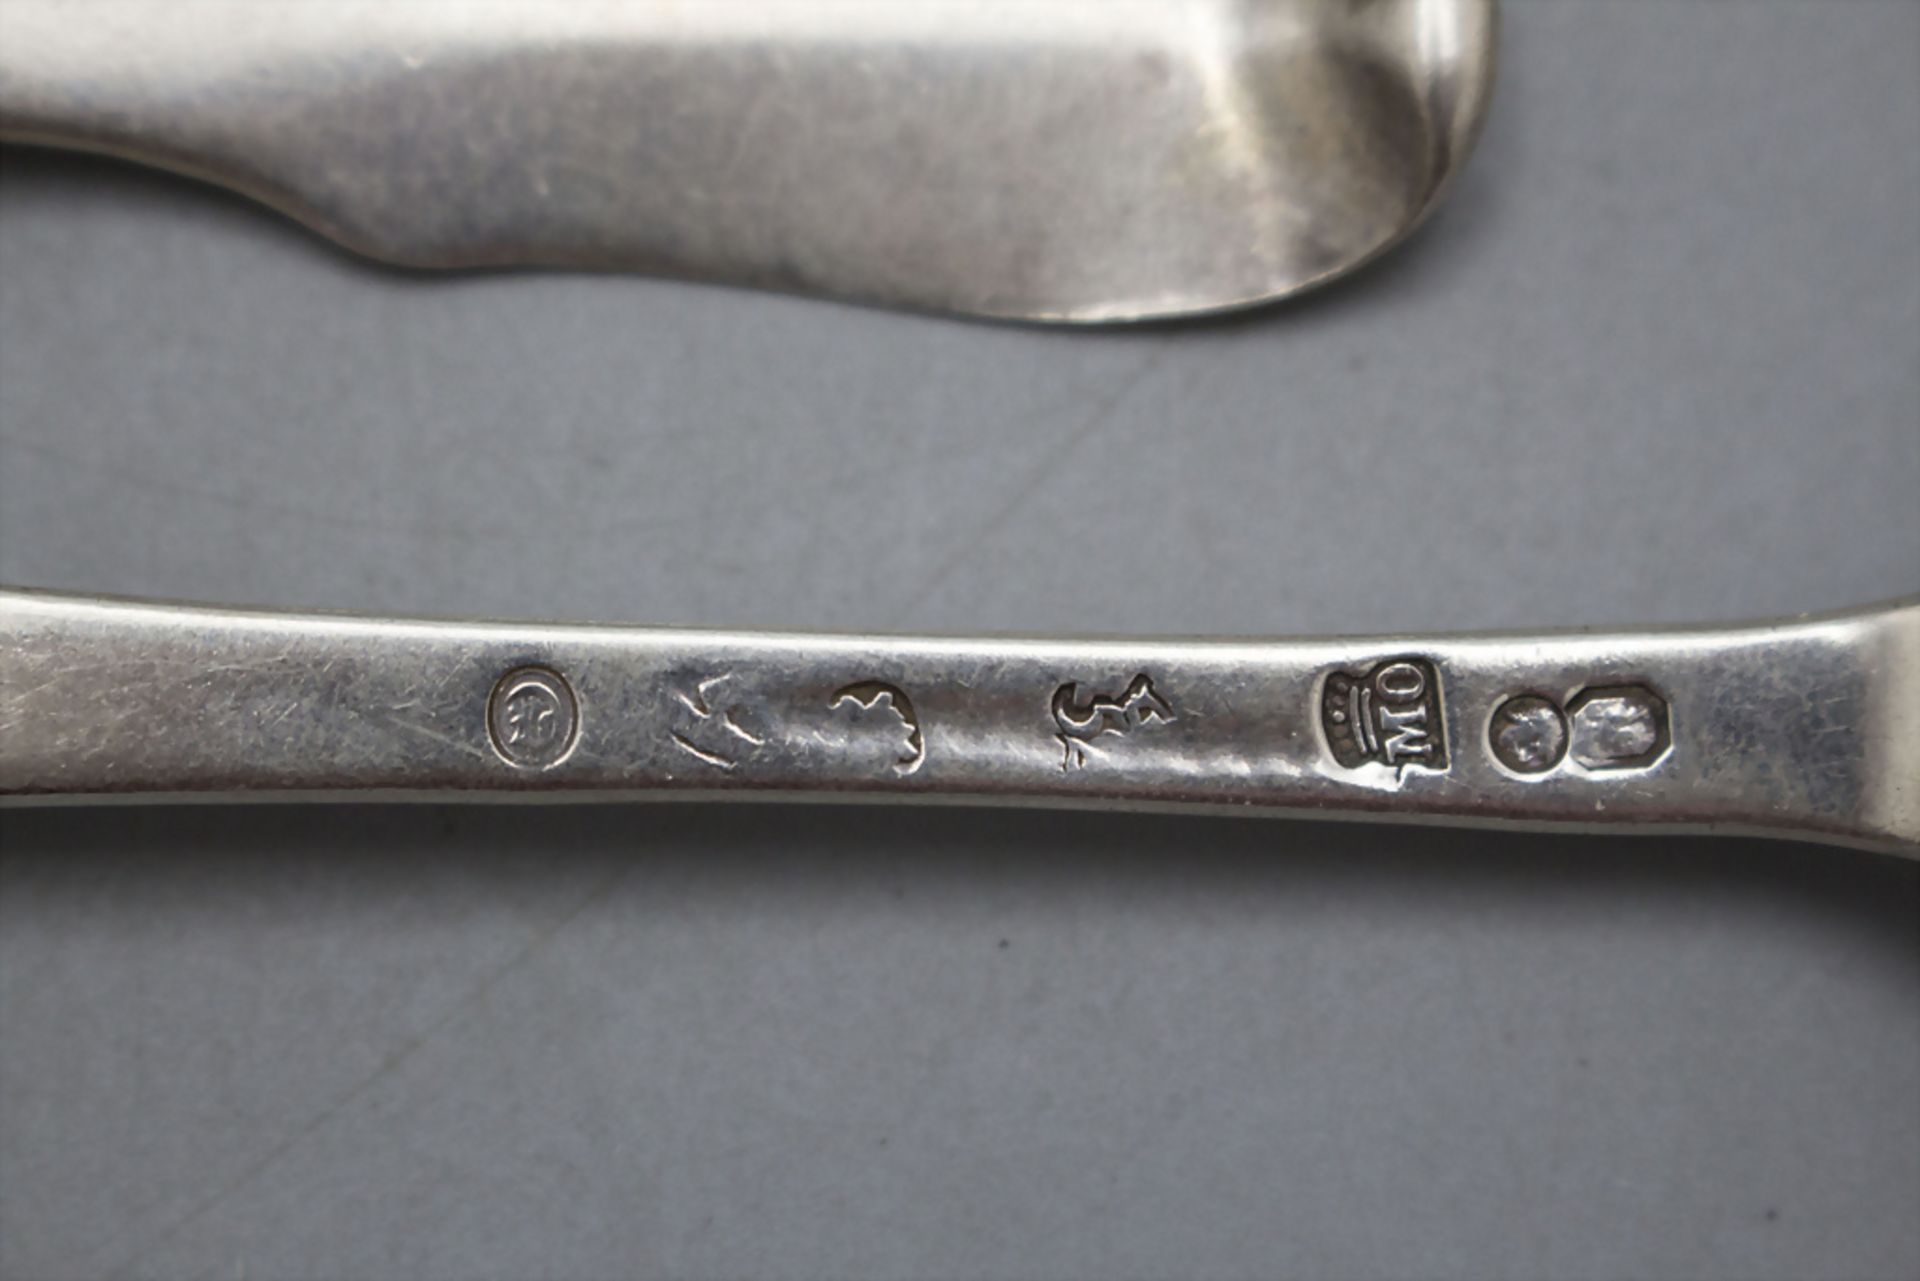 12 tlg. Barock Besteck / 12 pieces of Baroque silver cutlery, Belgien/Belgium, um 1752 - Image 2 of 3